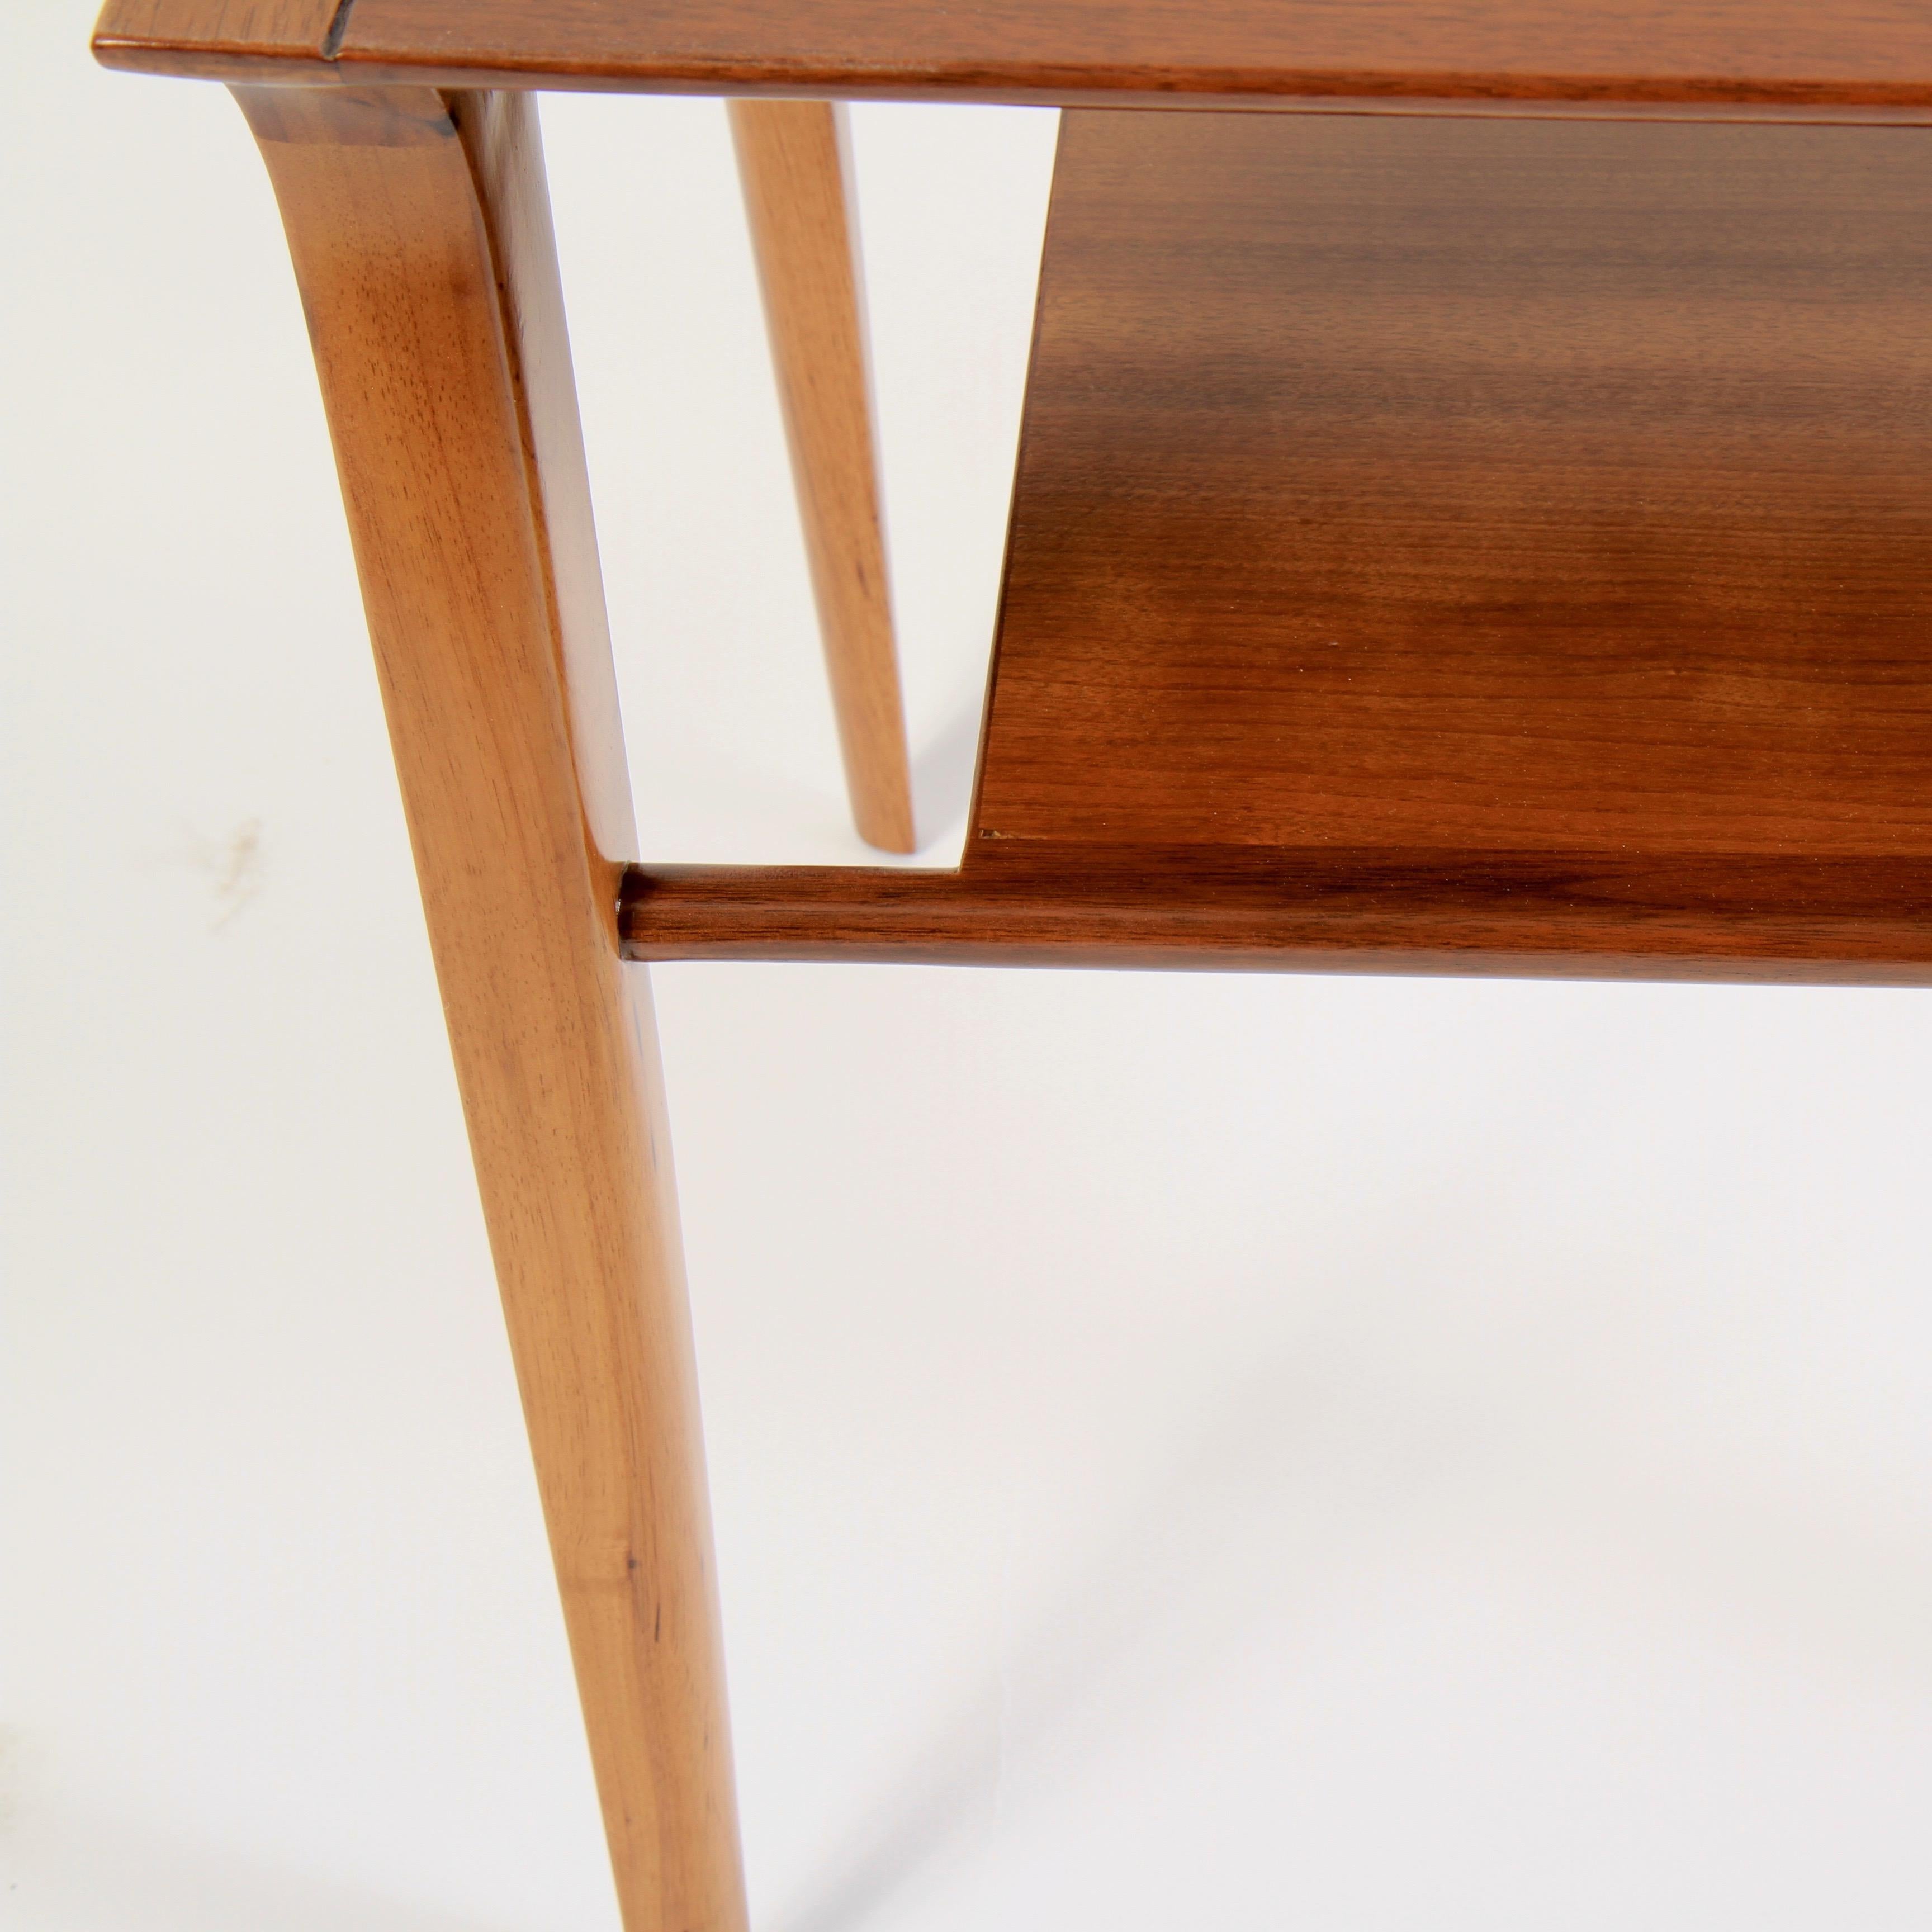 Mid-Century Modern John Van Koert “Profile” Two-Tiered Side Table for Drexel